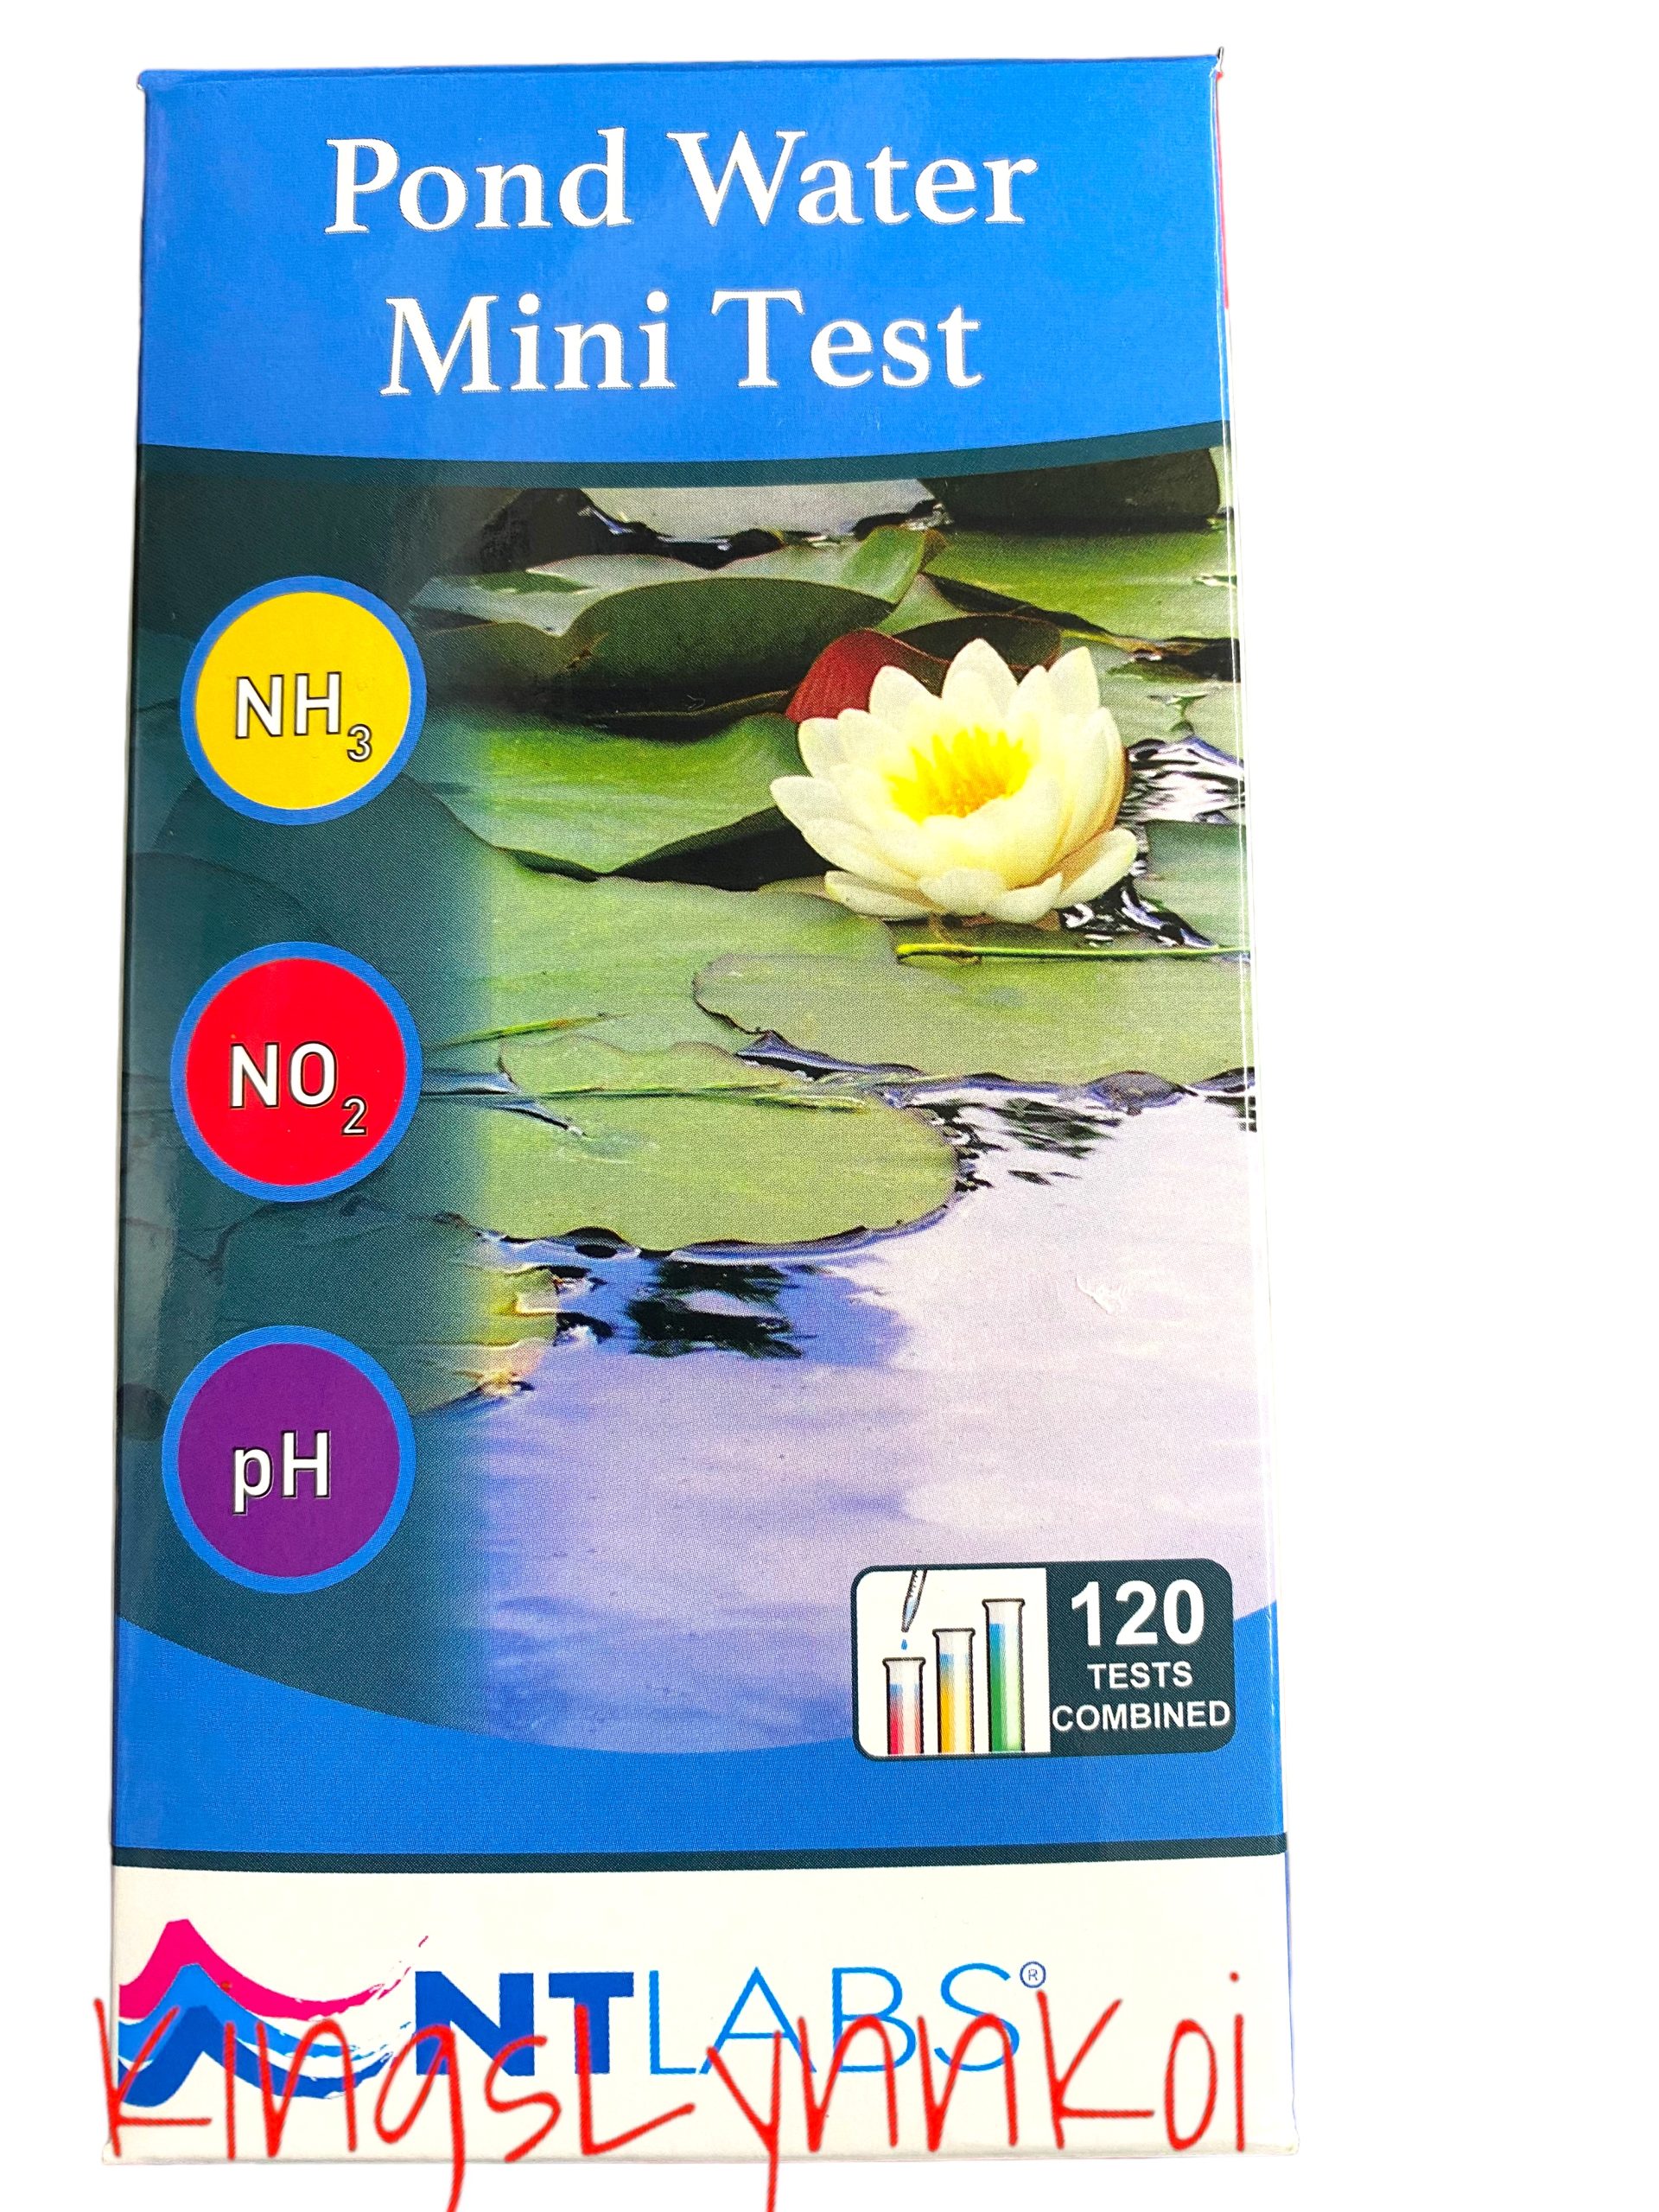 NTLABS pond water mini test strips.